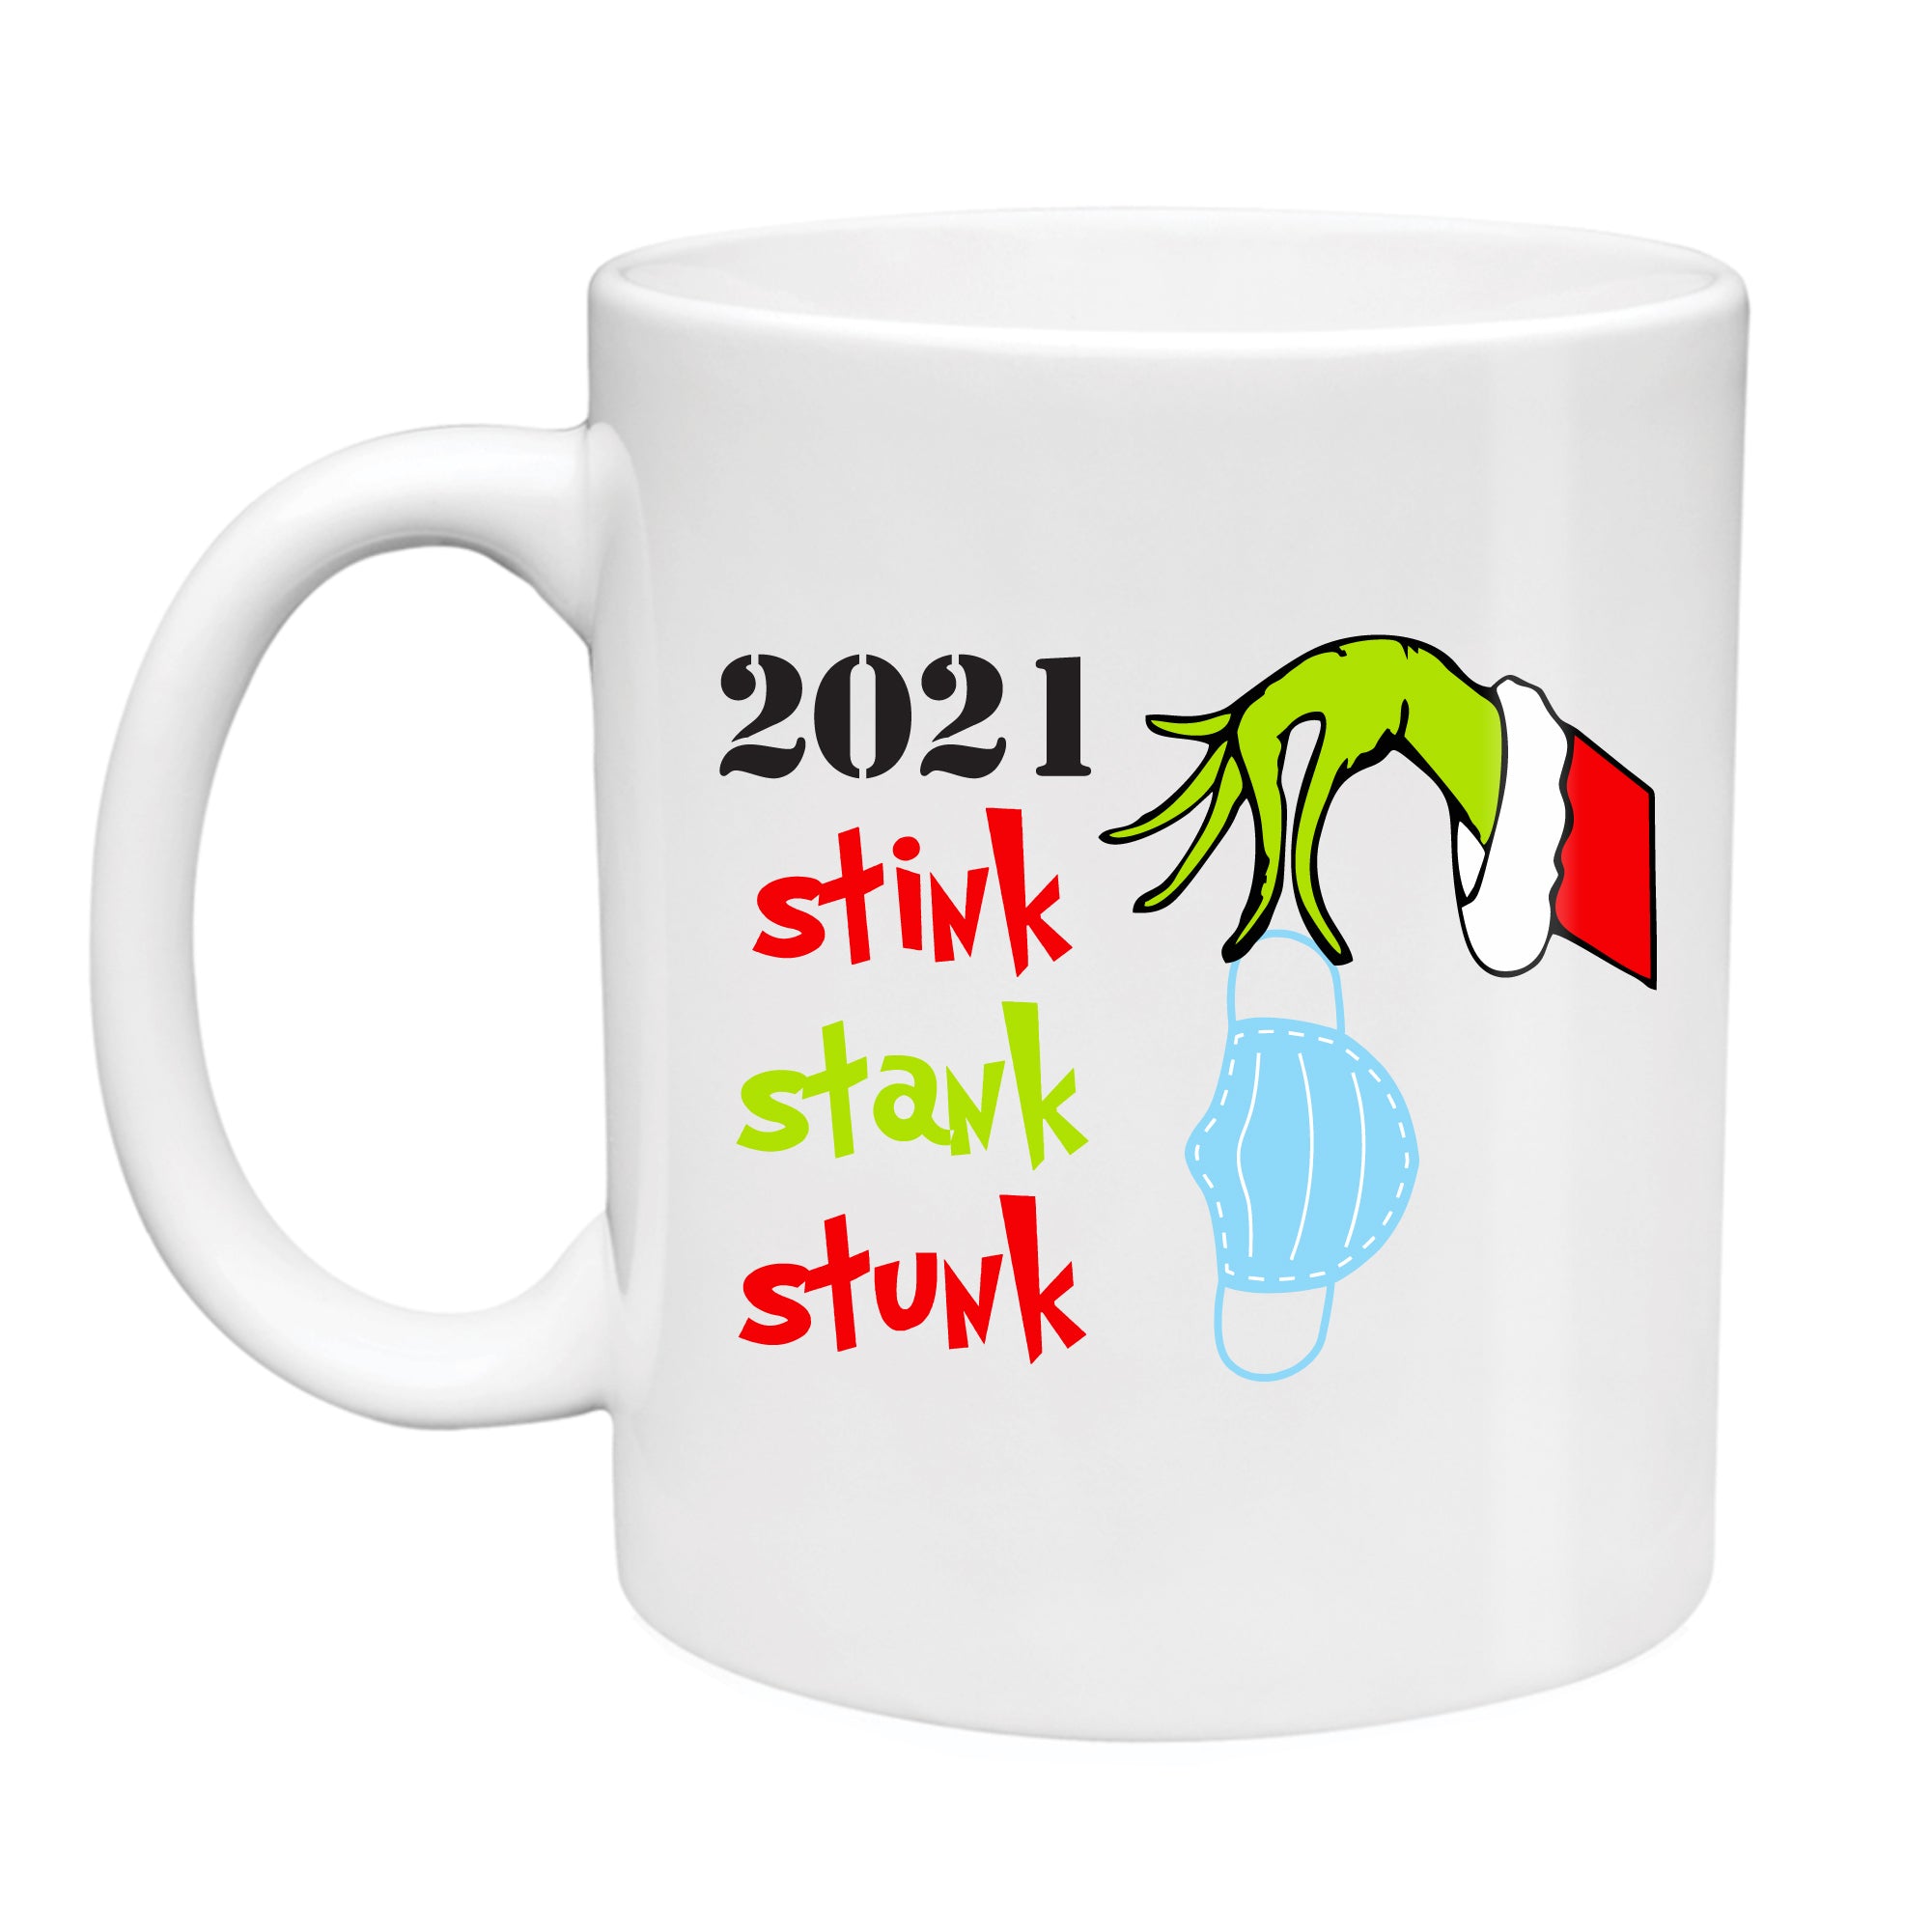 2021 Grinch Stink Stank Stunk 11 oz. Graphic Mugs